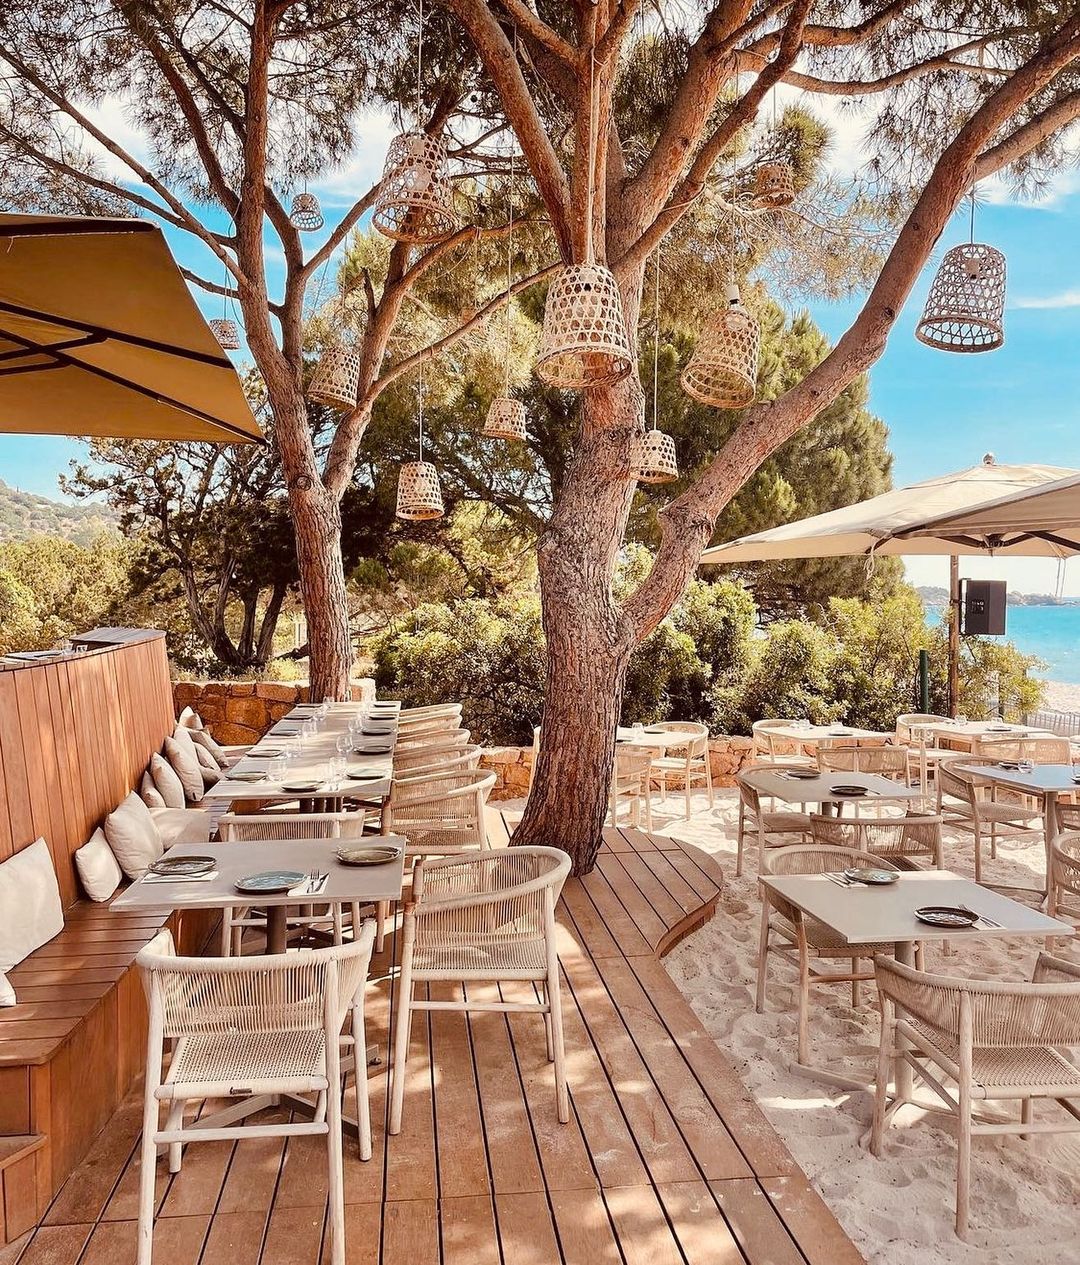 Tropical beach vibes at Sea Lounge Porto Vecchio's Restaurant - Best Beach Restaurants in Europe